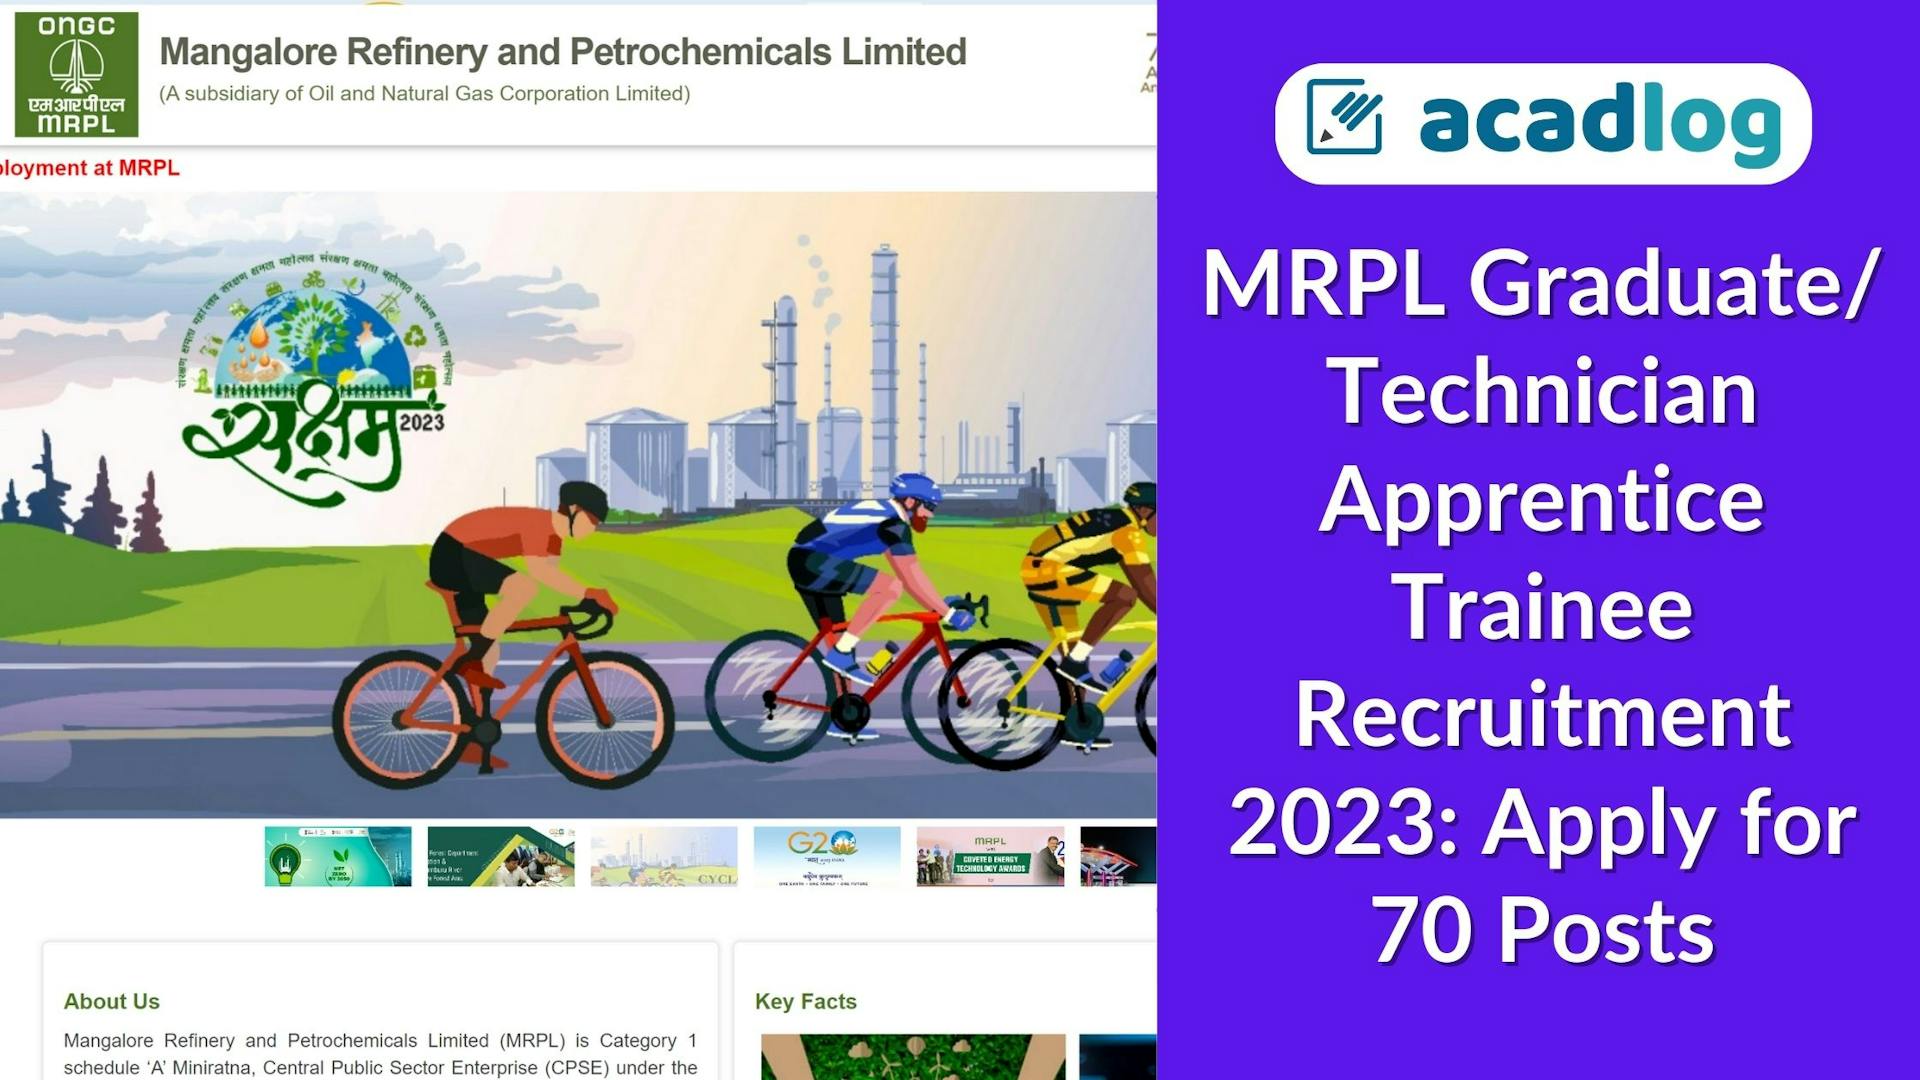 MRPL Graduate/Technician Apprentice Trainee Recruitment 2023: Apply for 70 Posts